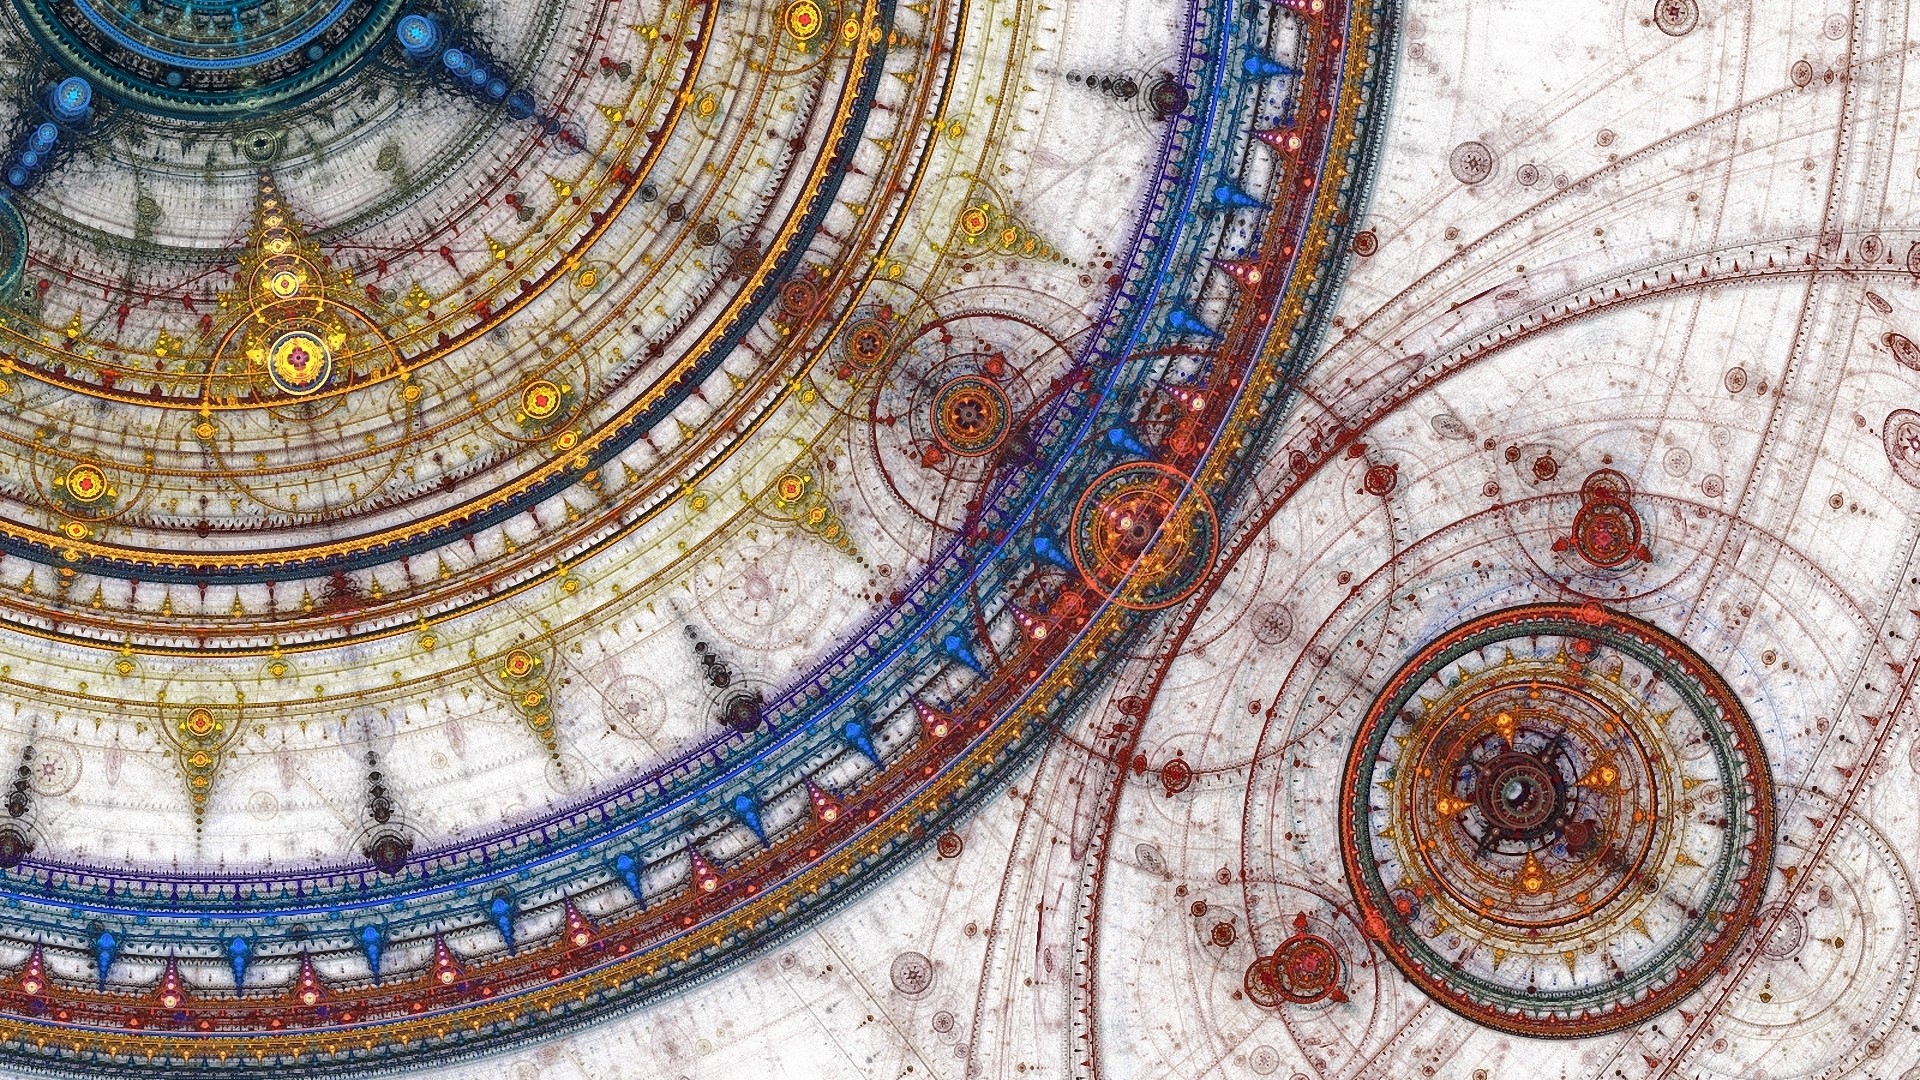 Digital Cool Geometry Shapes Art Wallpapers